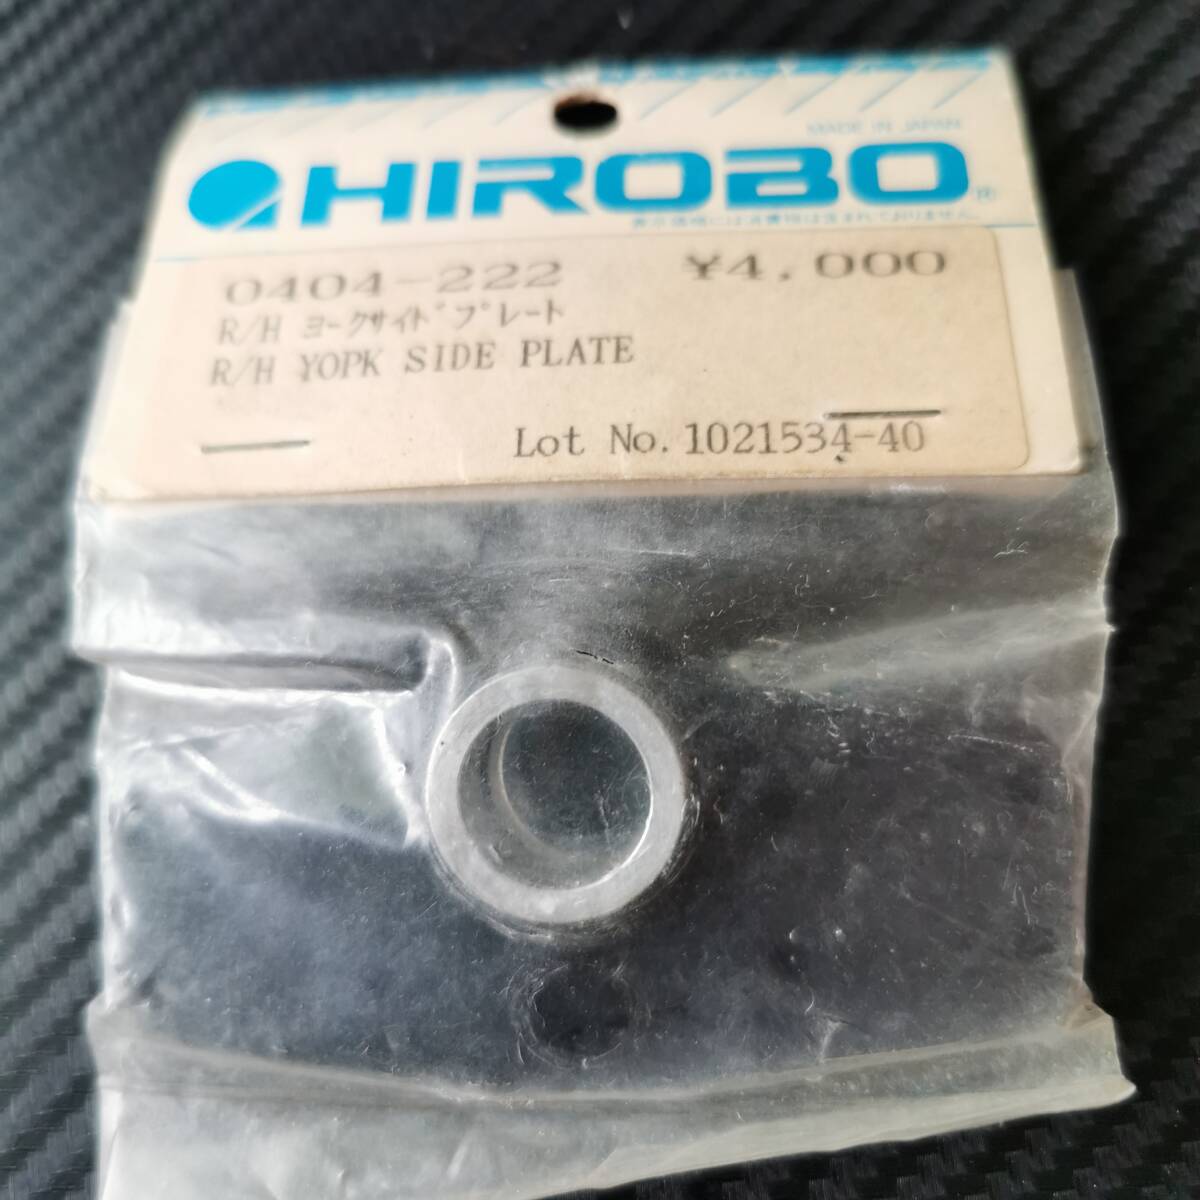  Hirobo R/H yoke side plate 0404-222 unused goods 